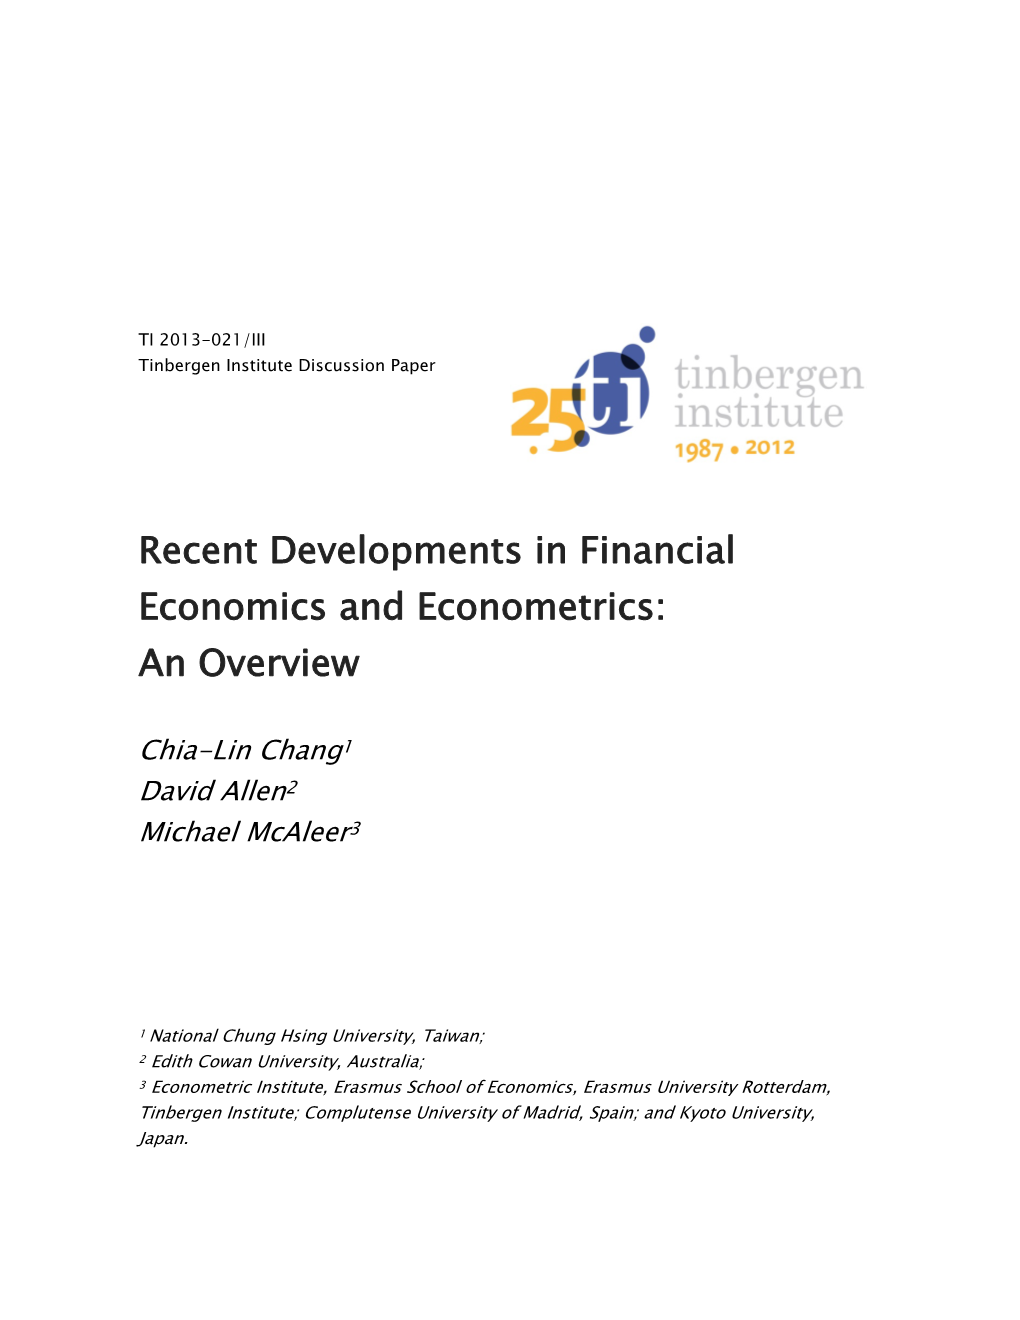 Recent Developments in Financial Economics and Econometrics: an Overview